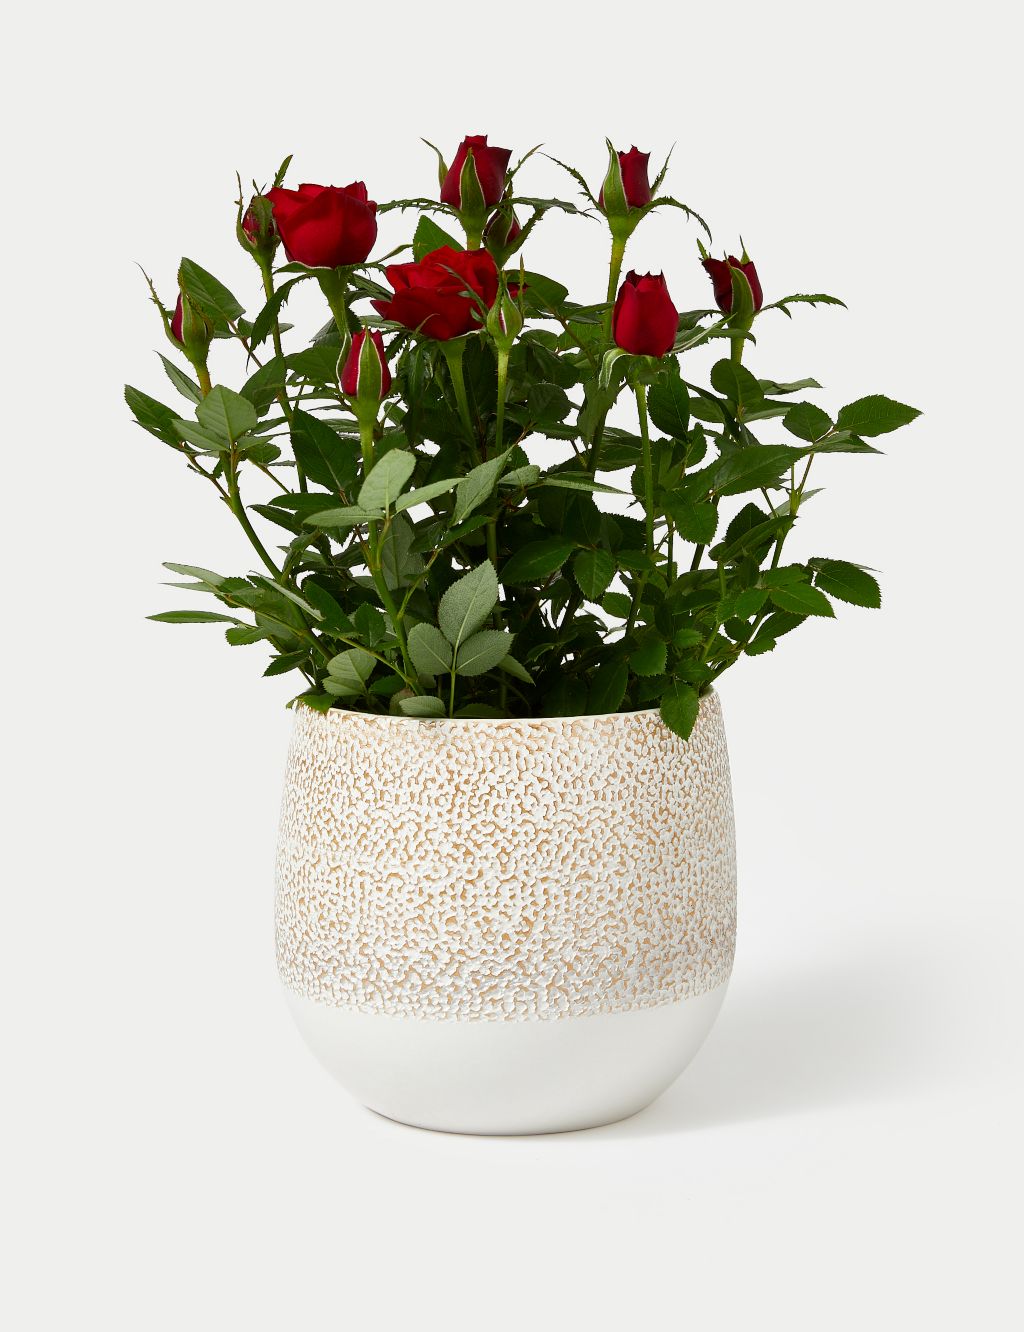 Red Rose in Ceramic Pot image 2